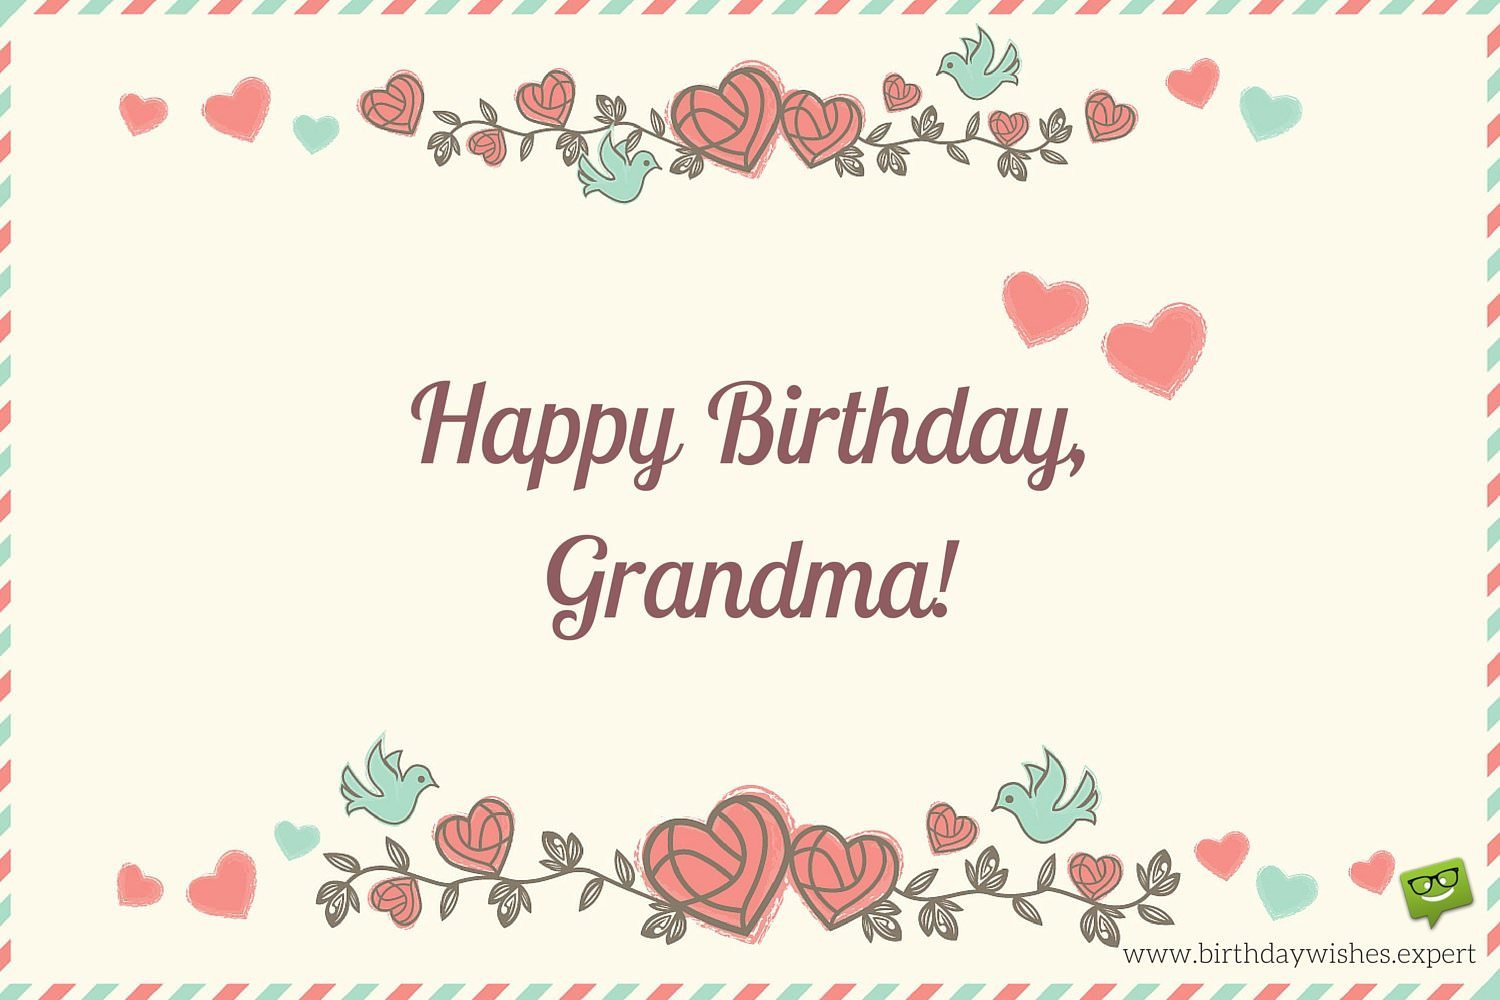 Happy Birthday Grandma Cards
 Happy Birthday Grandma on image of an old envelope with